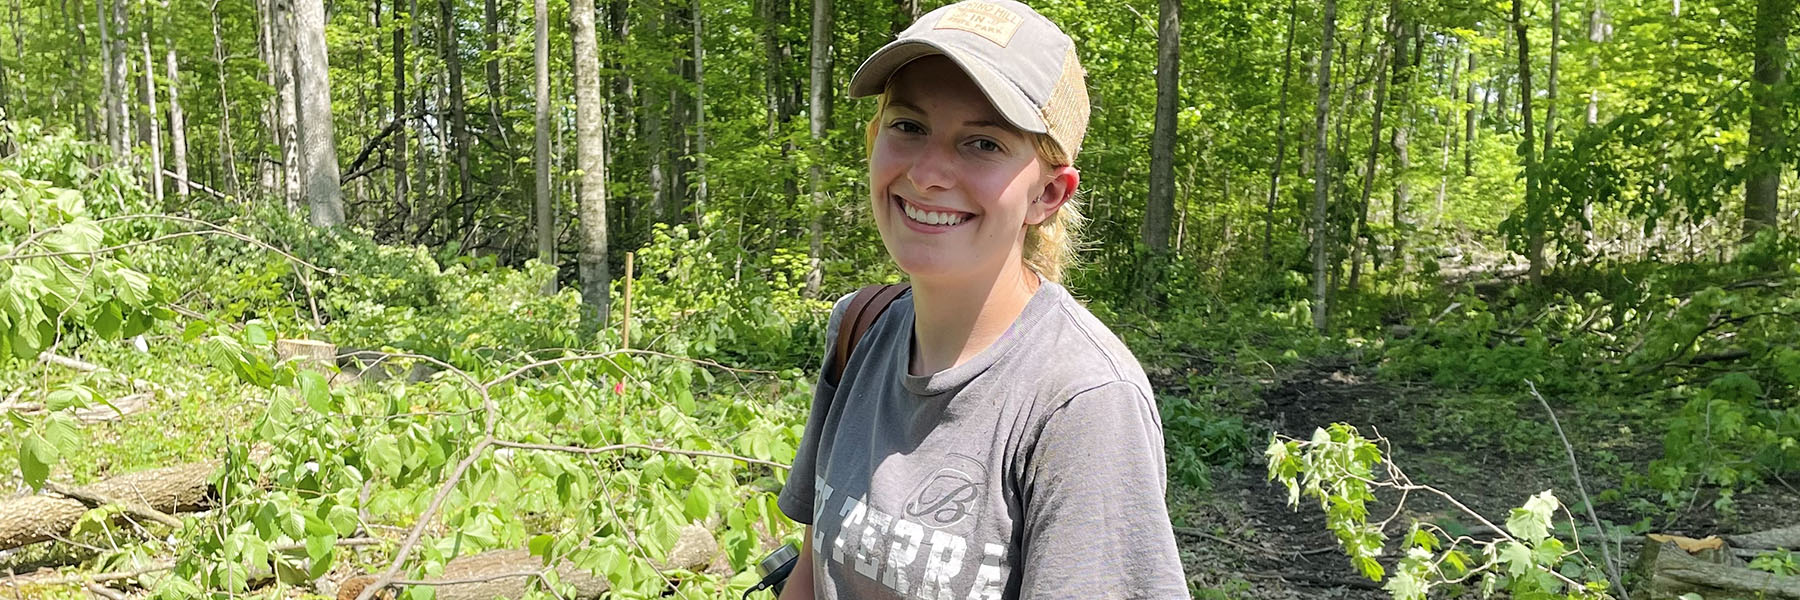 Senior wildlife major Summer Brown planting trees during her summer job with Purdue FNR.